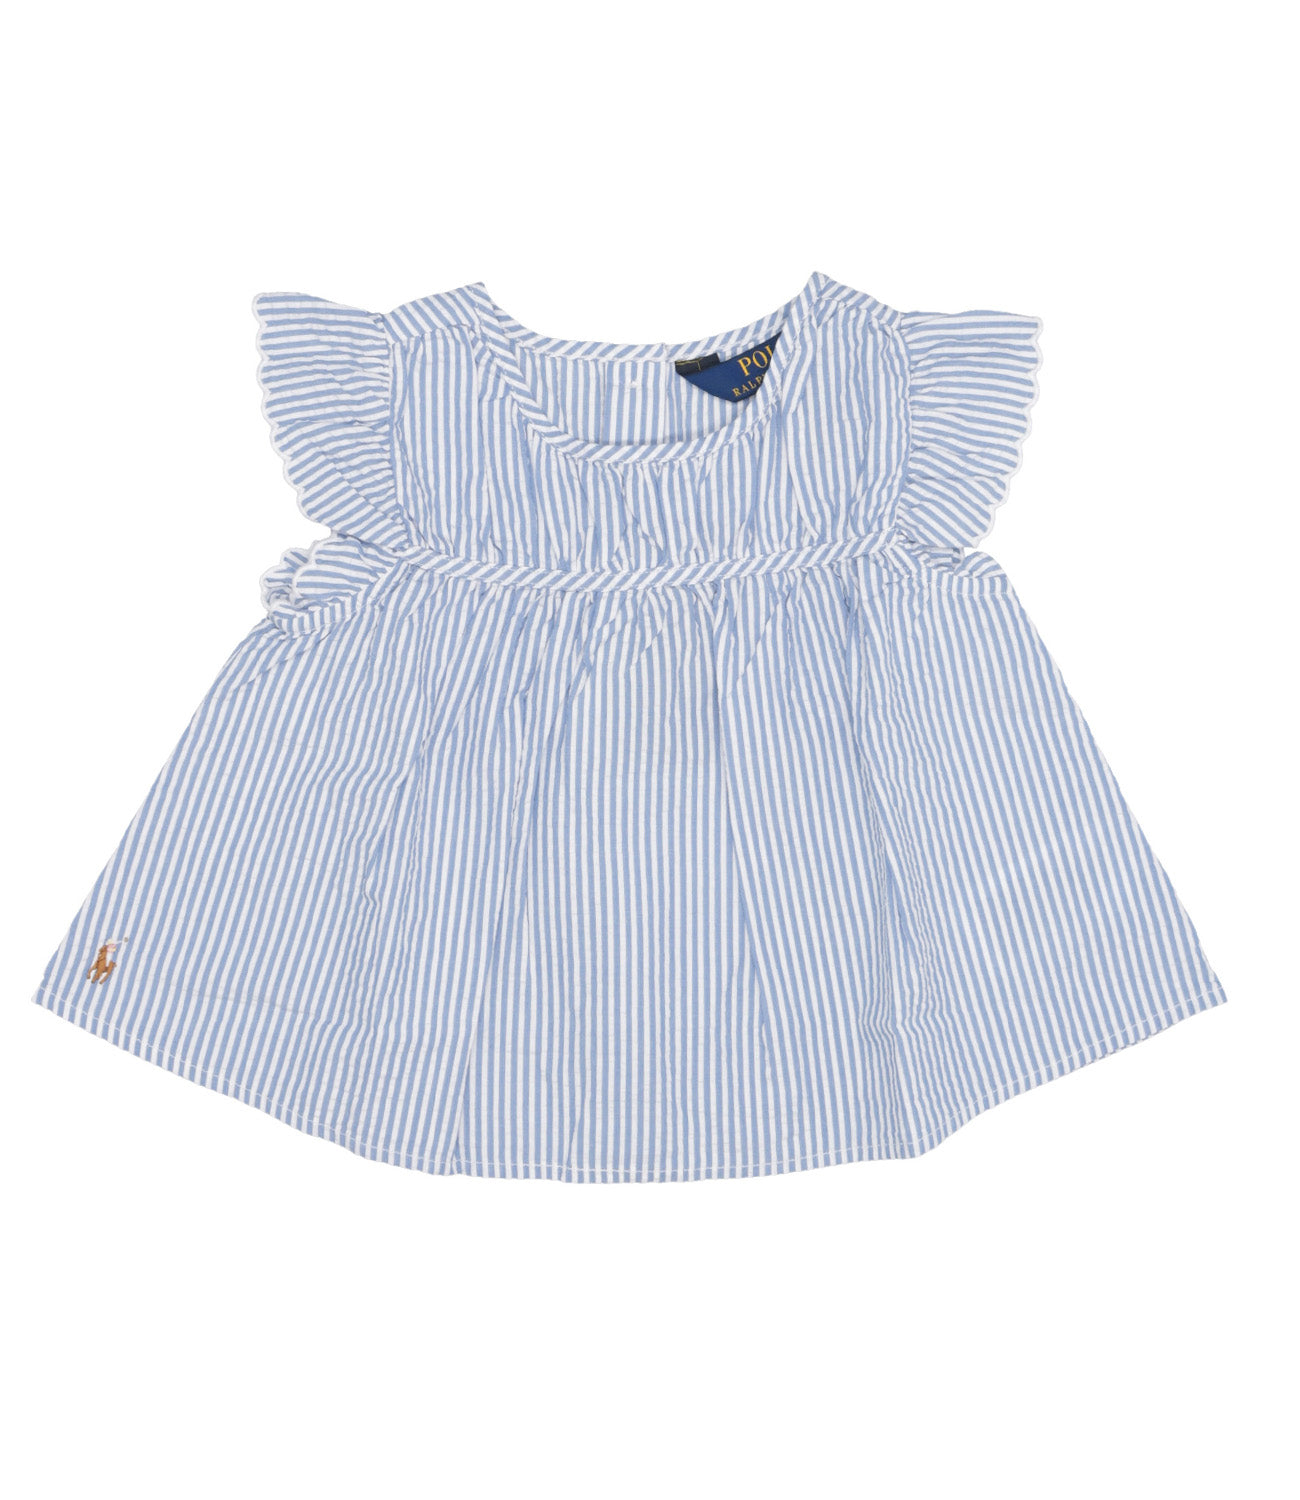 Ralph Lauren Childrenswear | Blue and White Blouse